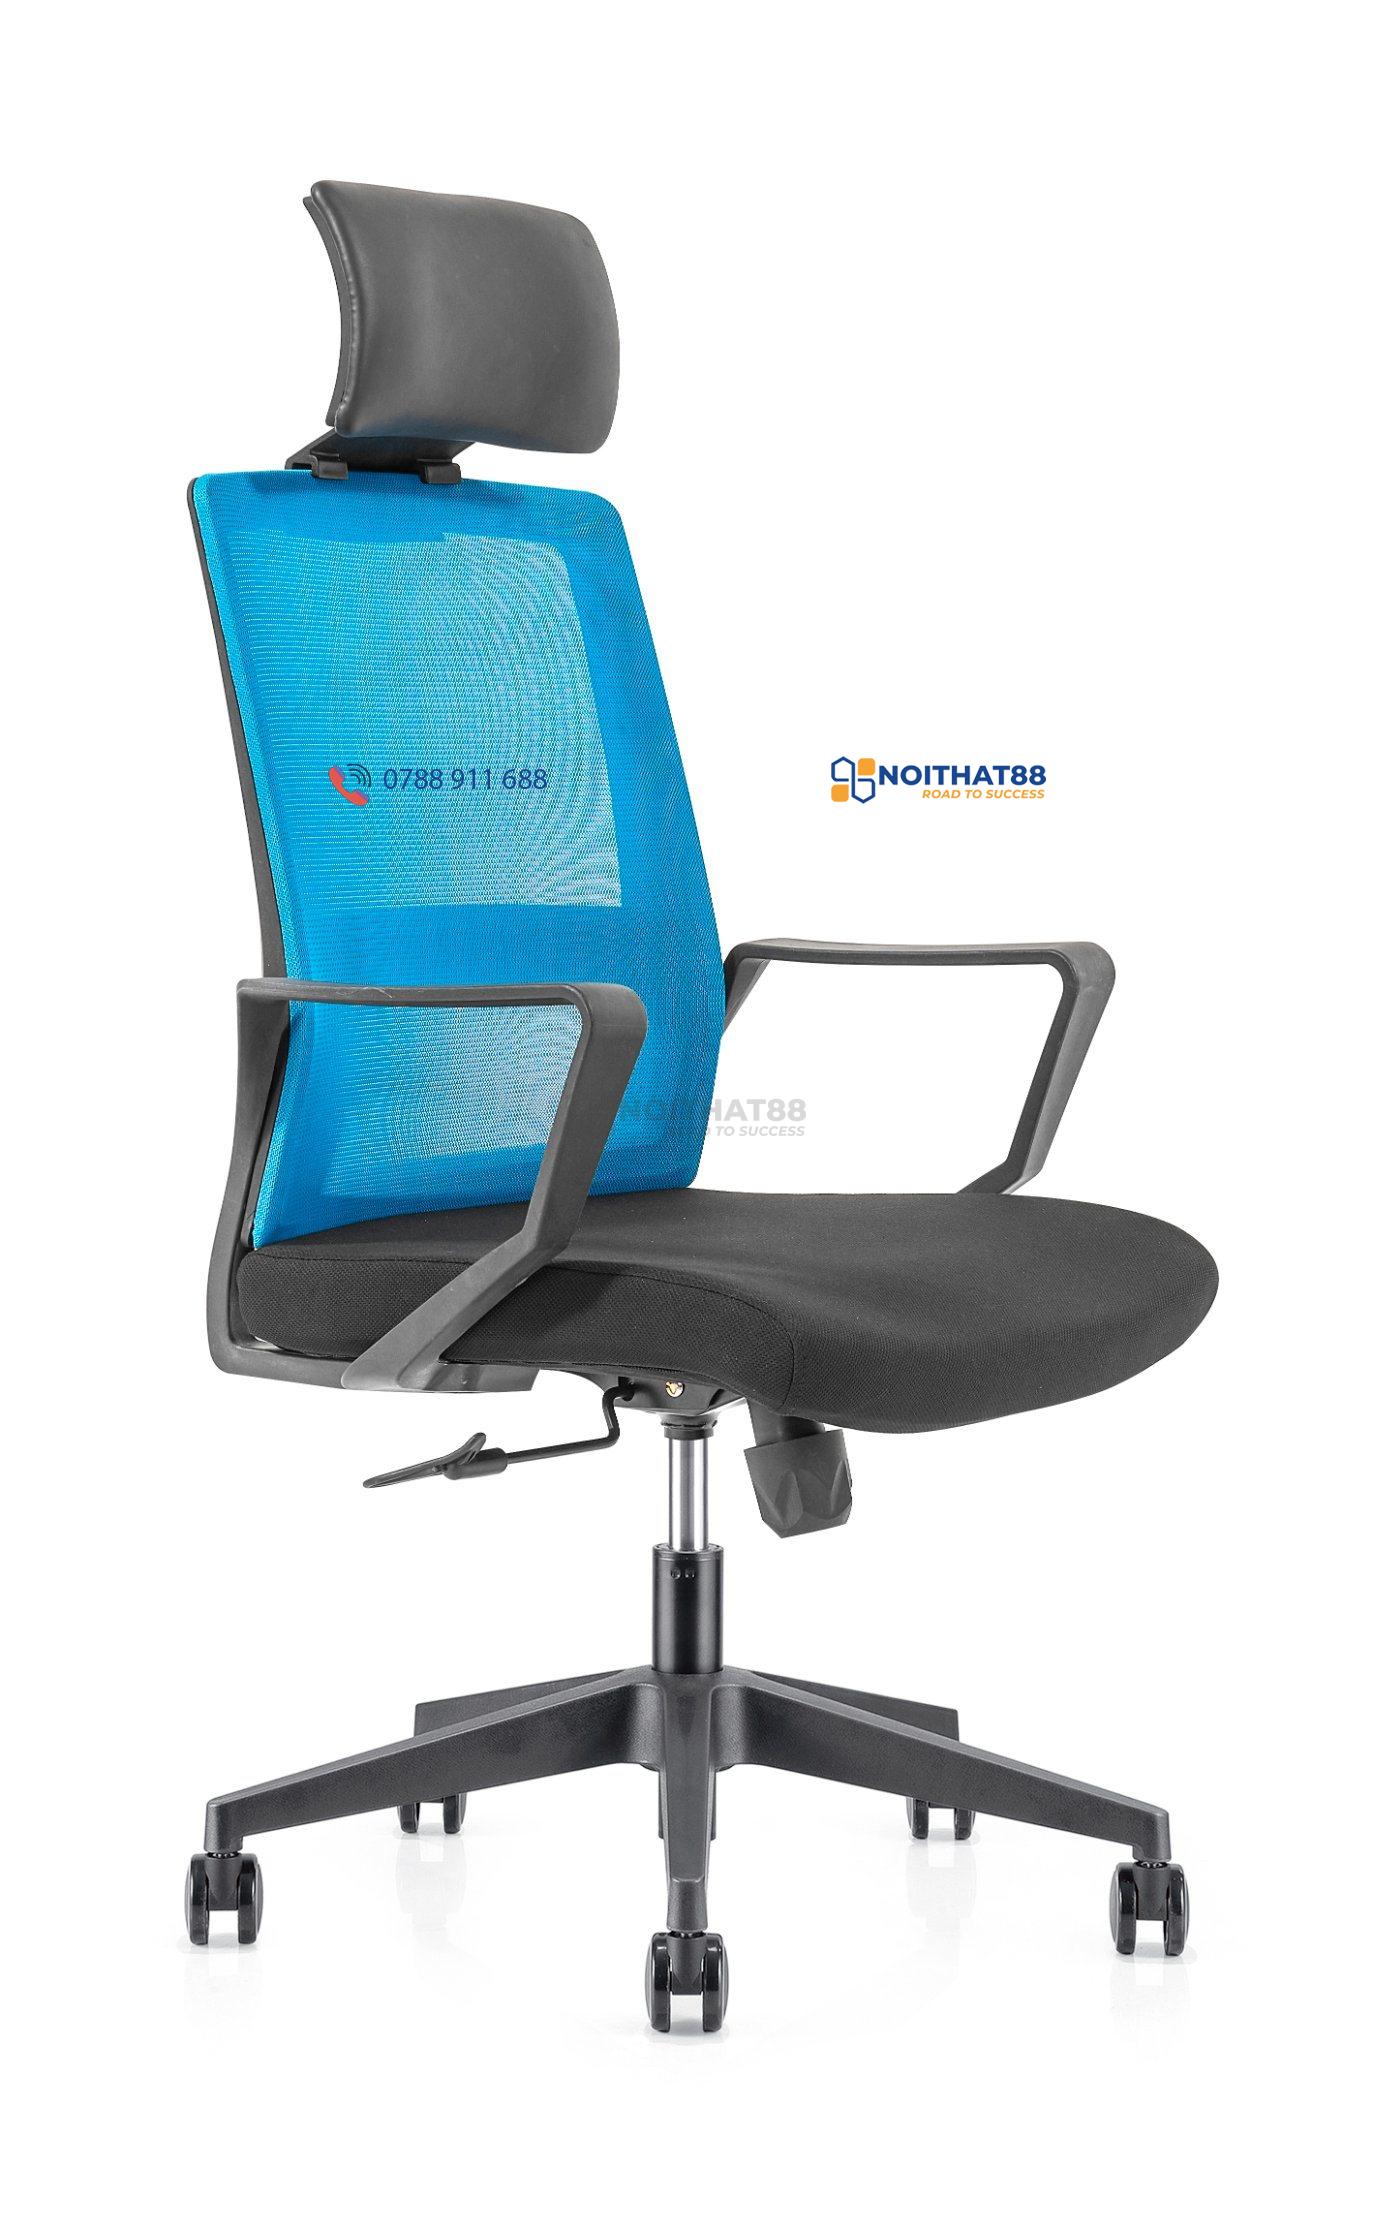 Modern-Office-Furniture-Chair-Staff-Vistor-Computer-Chair-Mesh-Swivel-Ergonomic-Chair.jpg